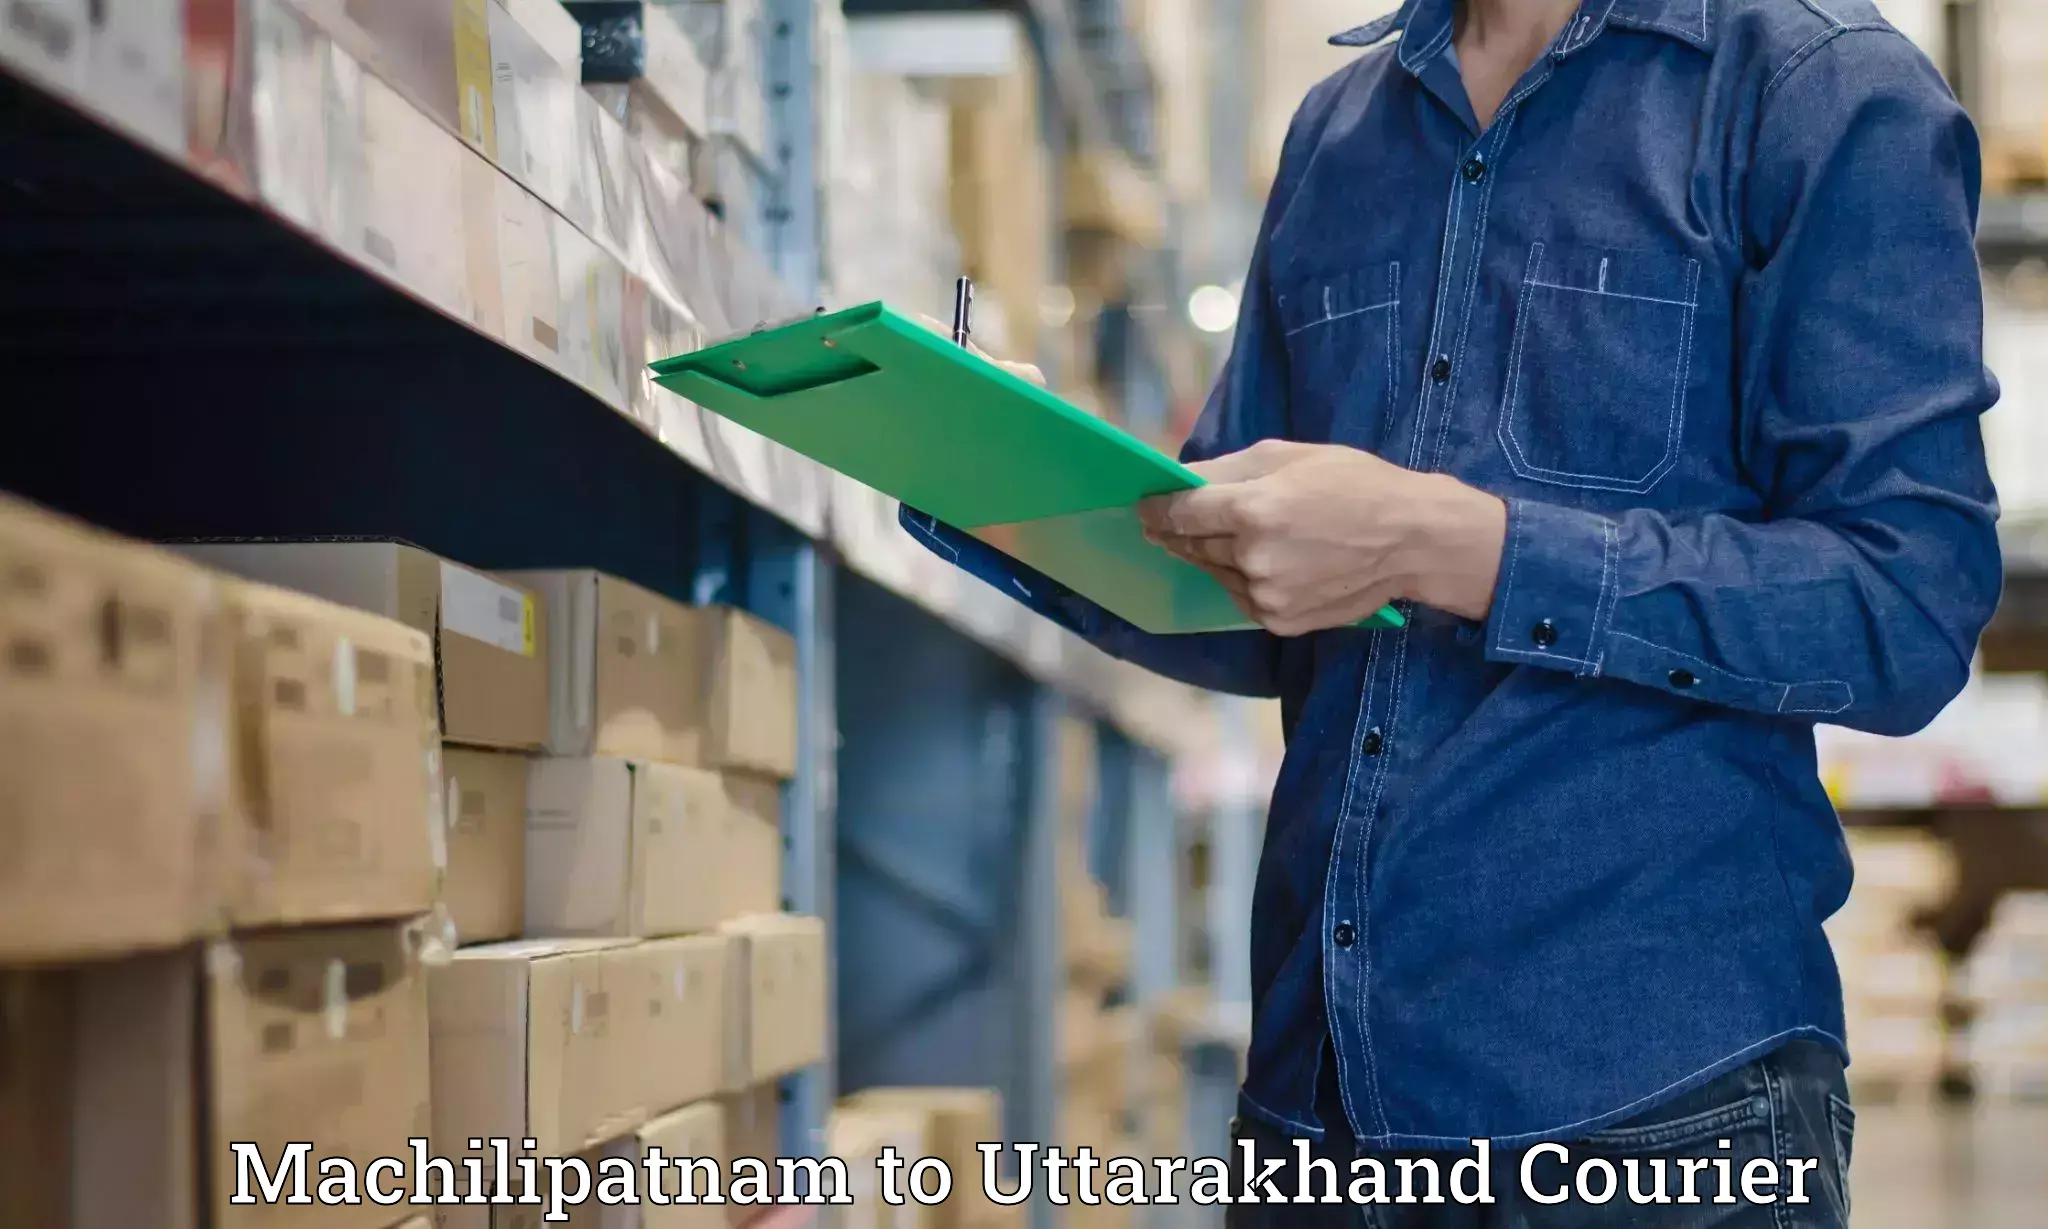 Cash on delivery service Machilipatnam to Dehradun